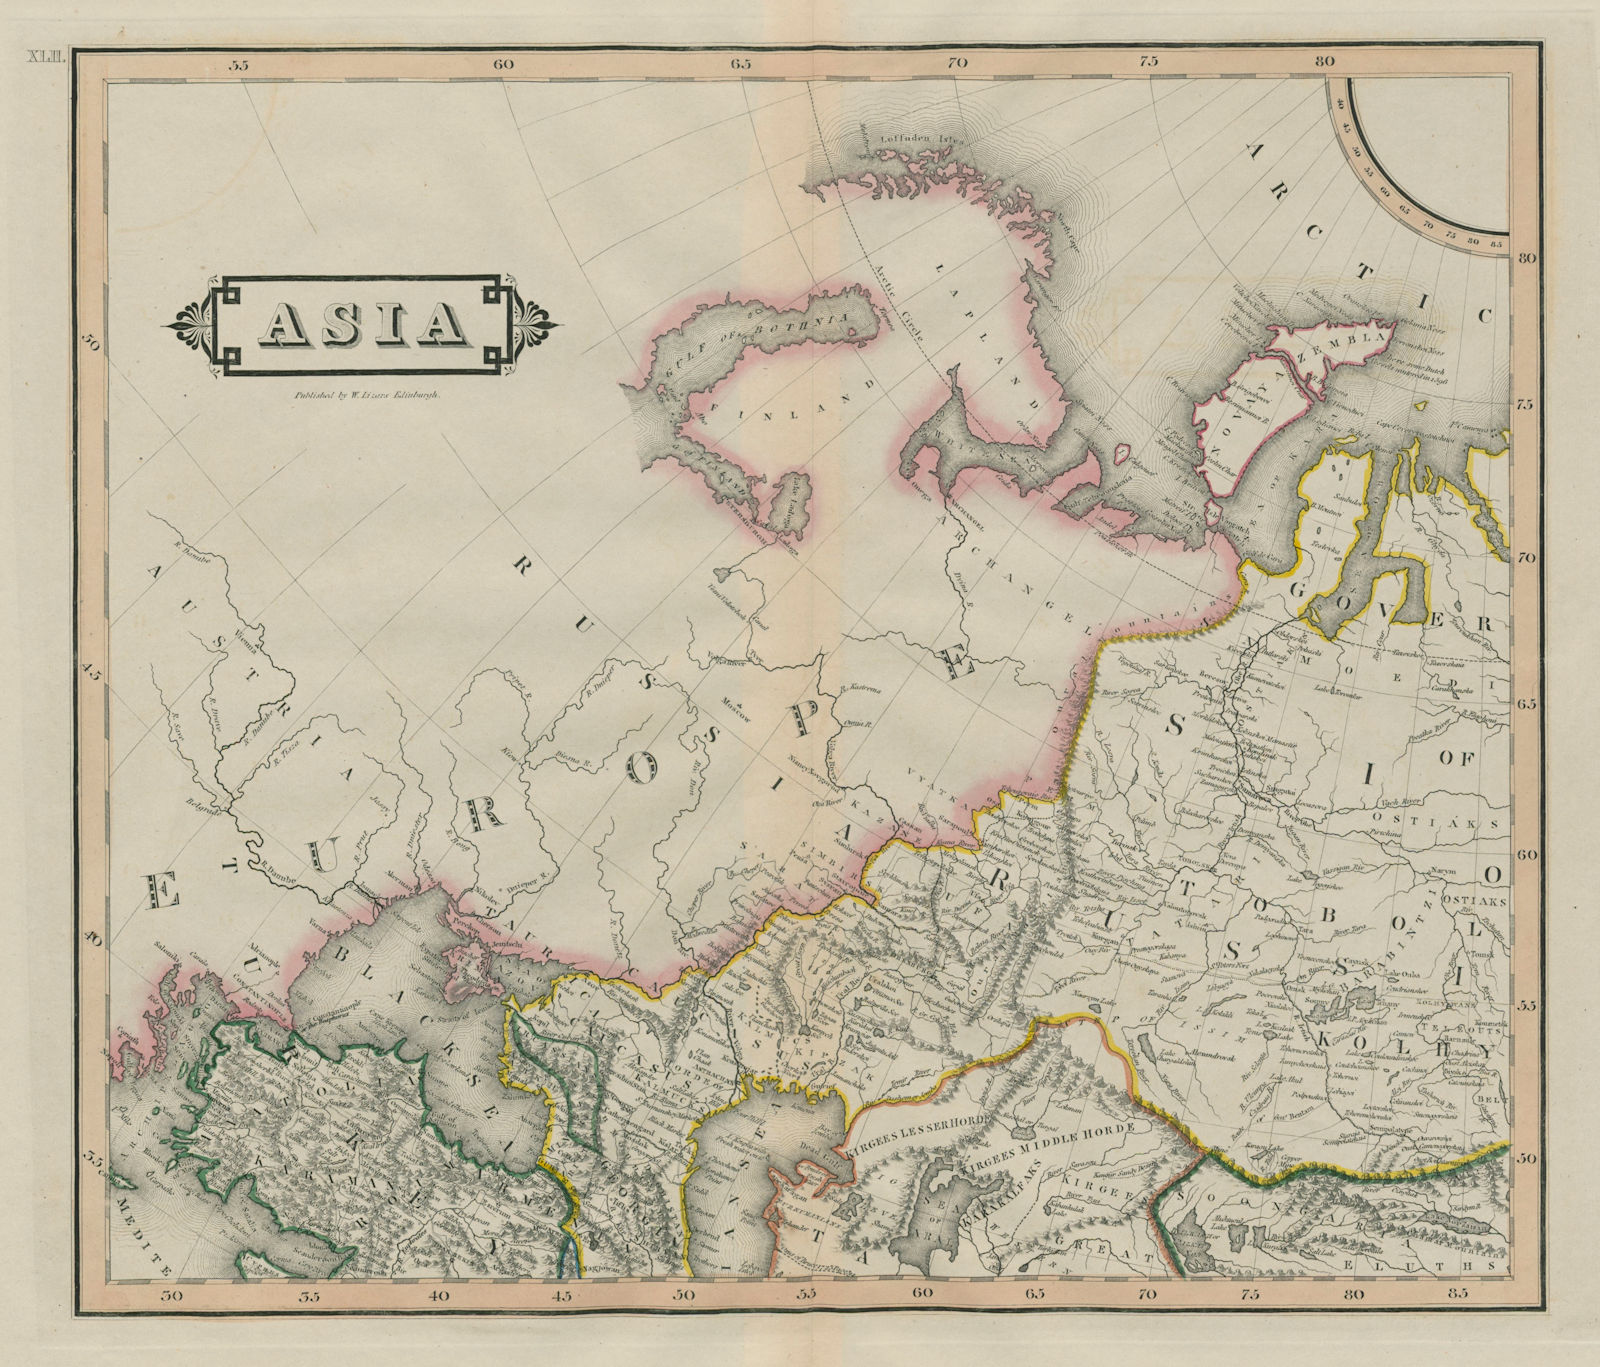 Associate Product North-west Asia. Russia Western Siberia Kazakhstan. LIZARS 1842 old map